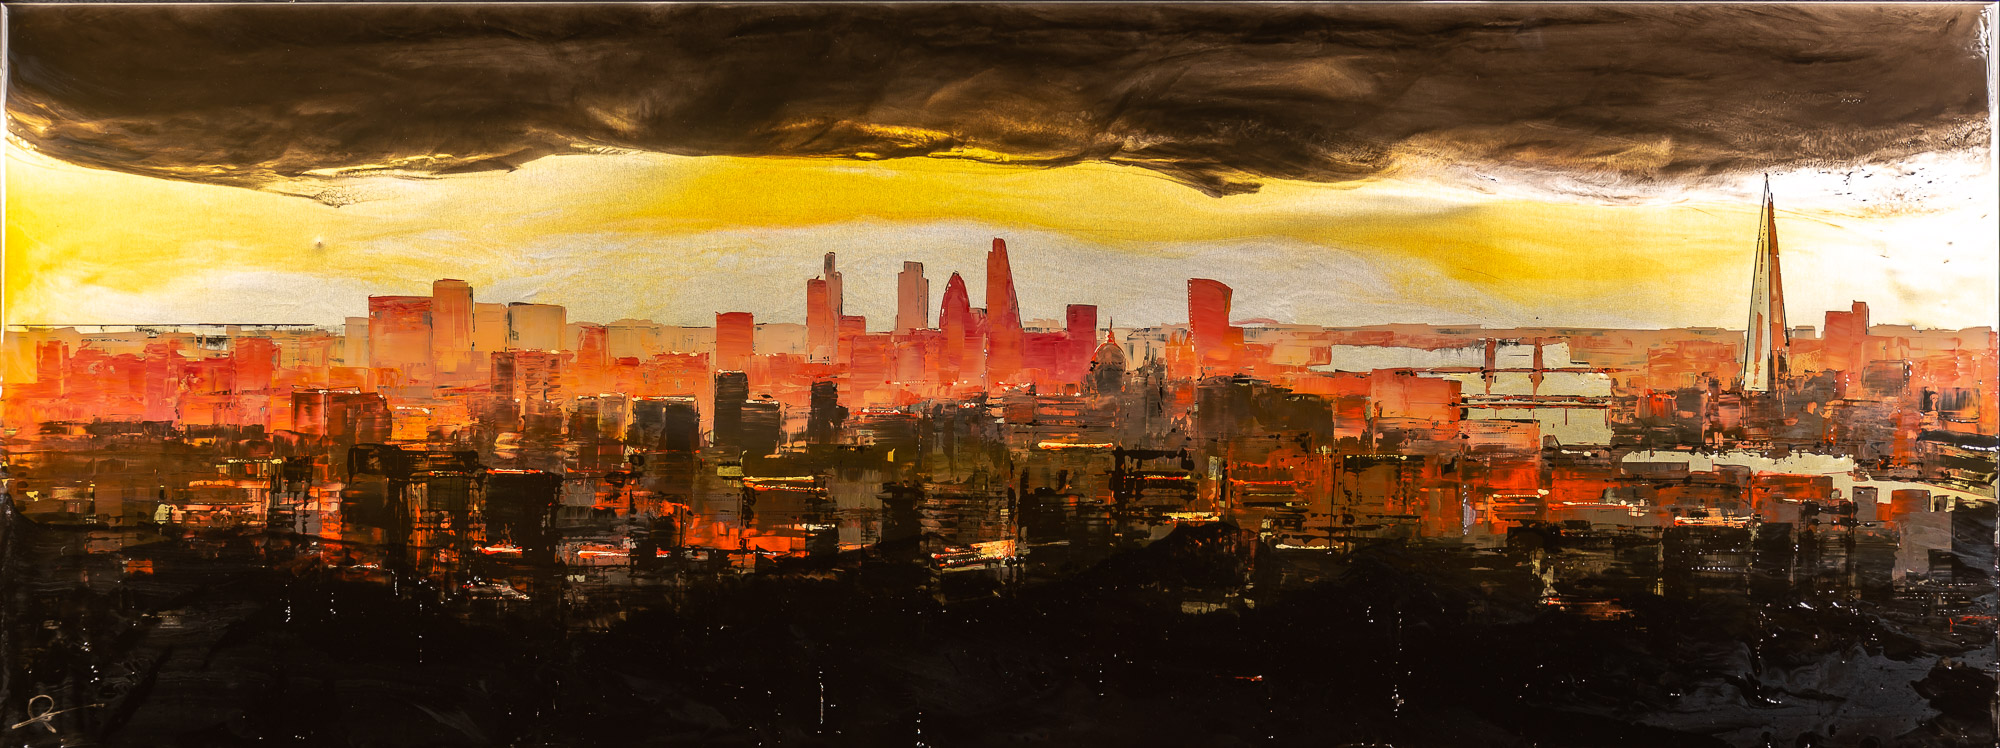 London Radiance by Paul Kenton, UK Contemporary artist, a London Cityscape Resined Mixed Media Original Painting on Aluminium of the London Skyline